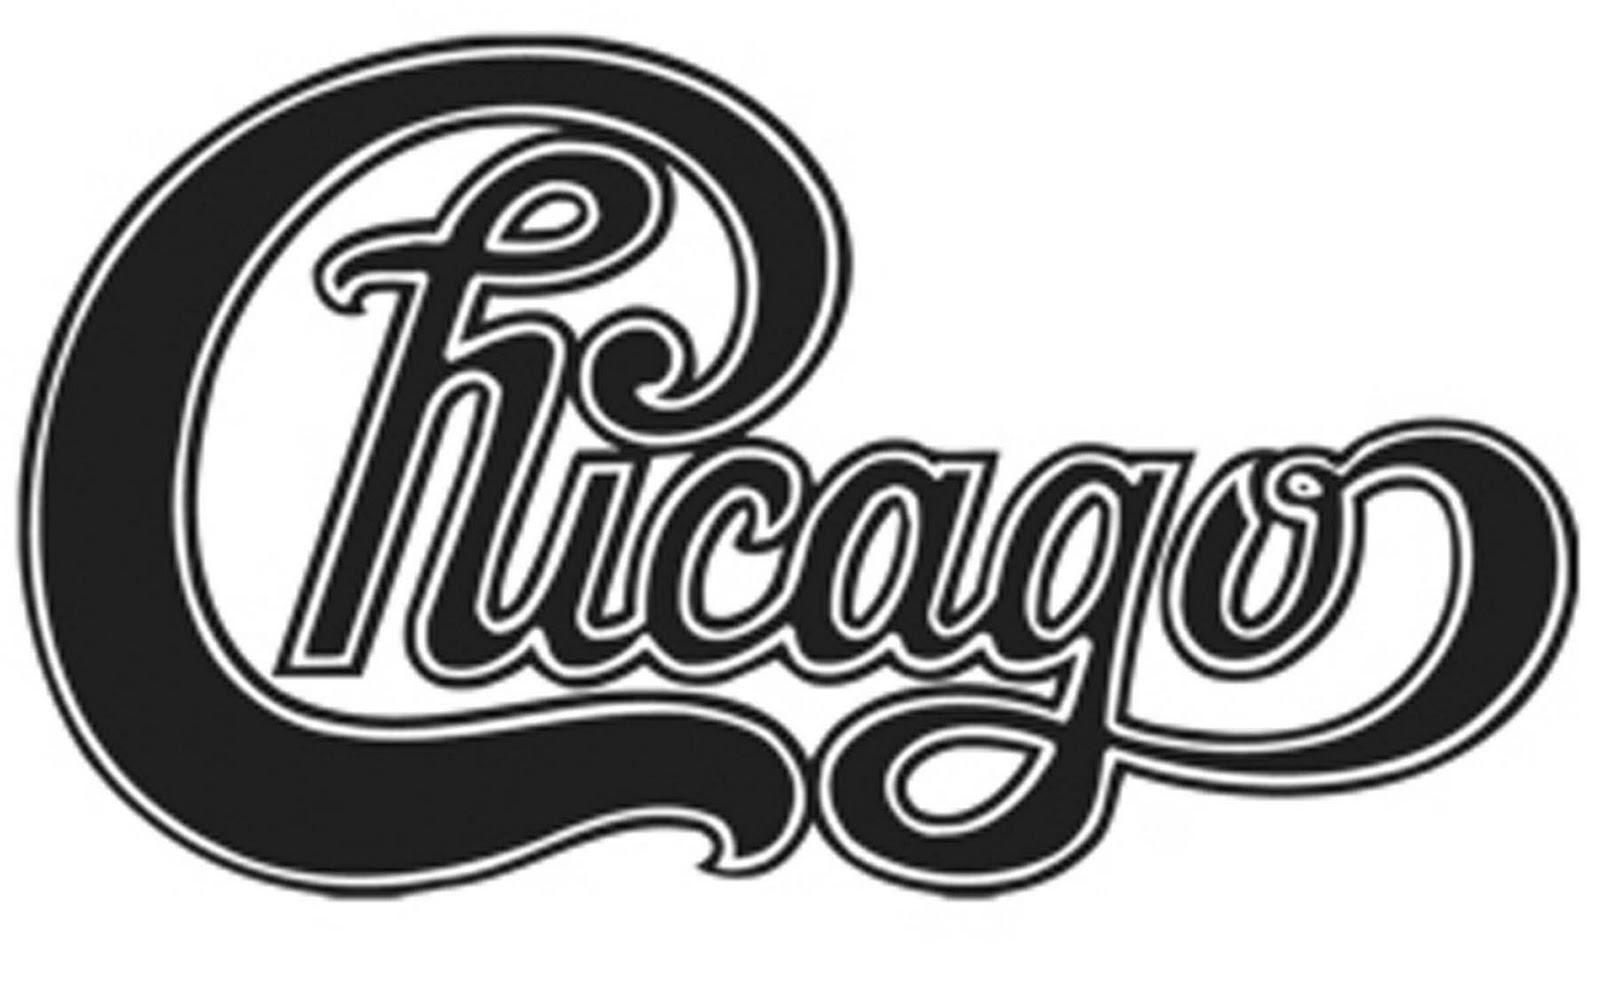 Chicago Logo - Chicago Logo